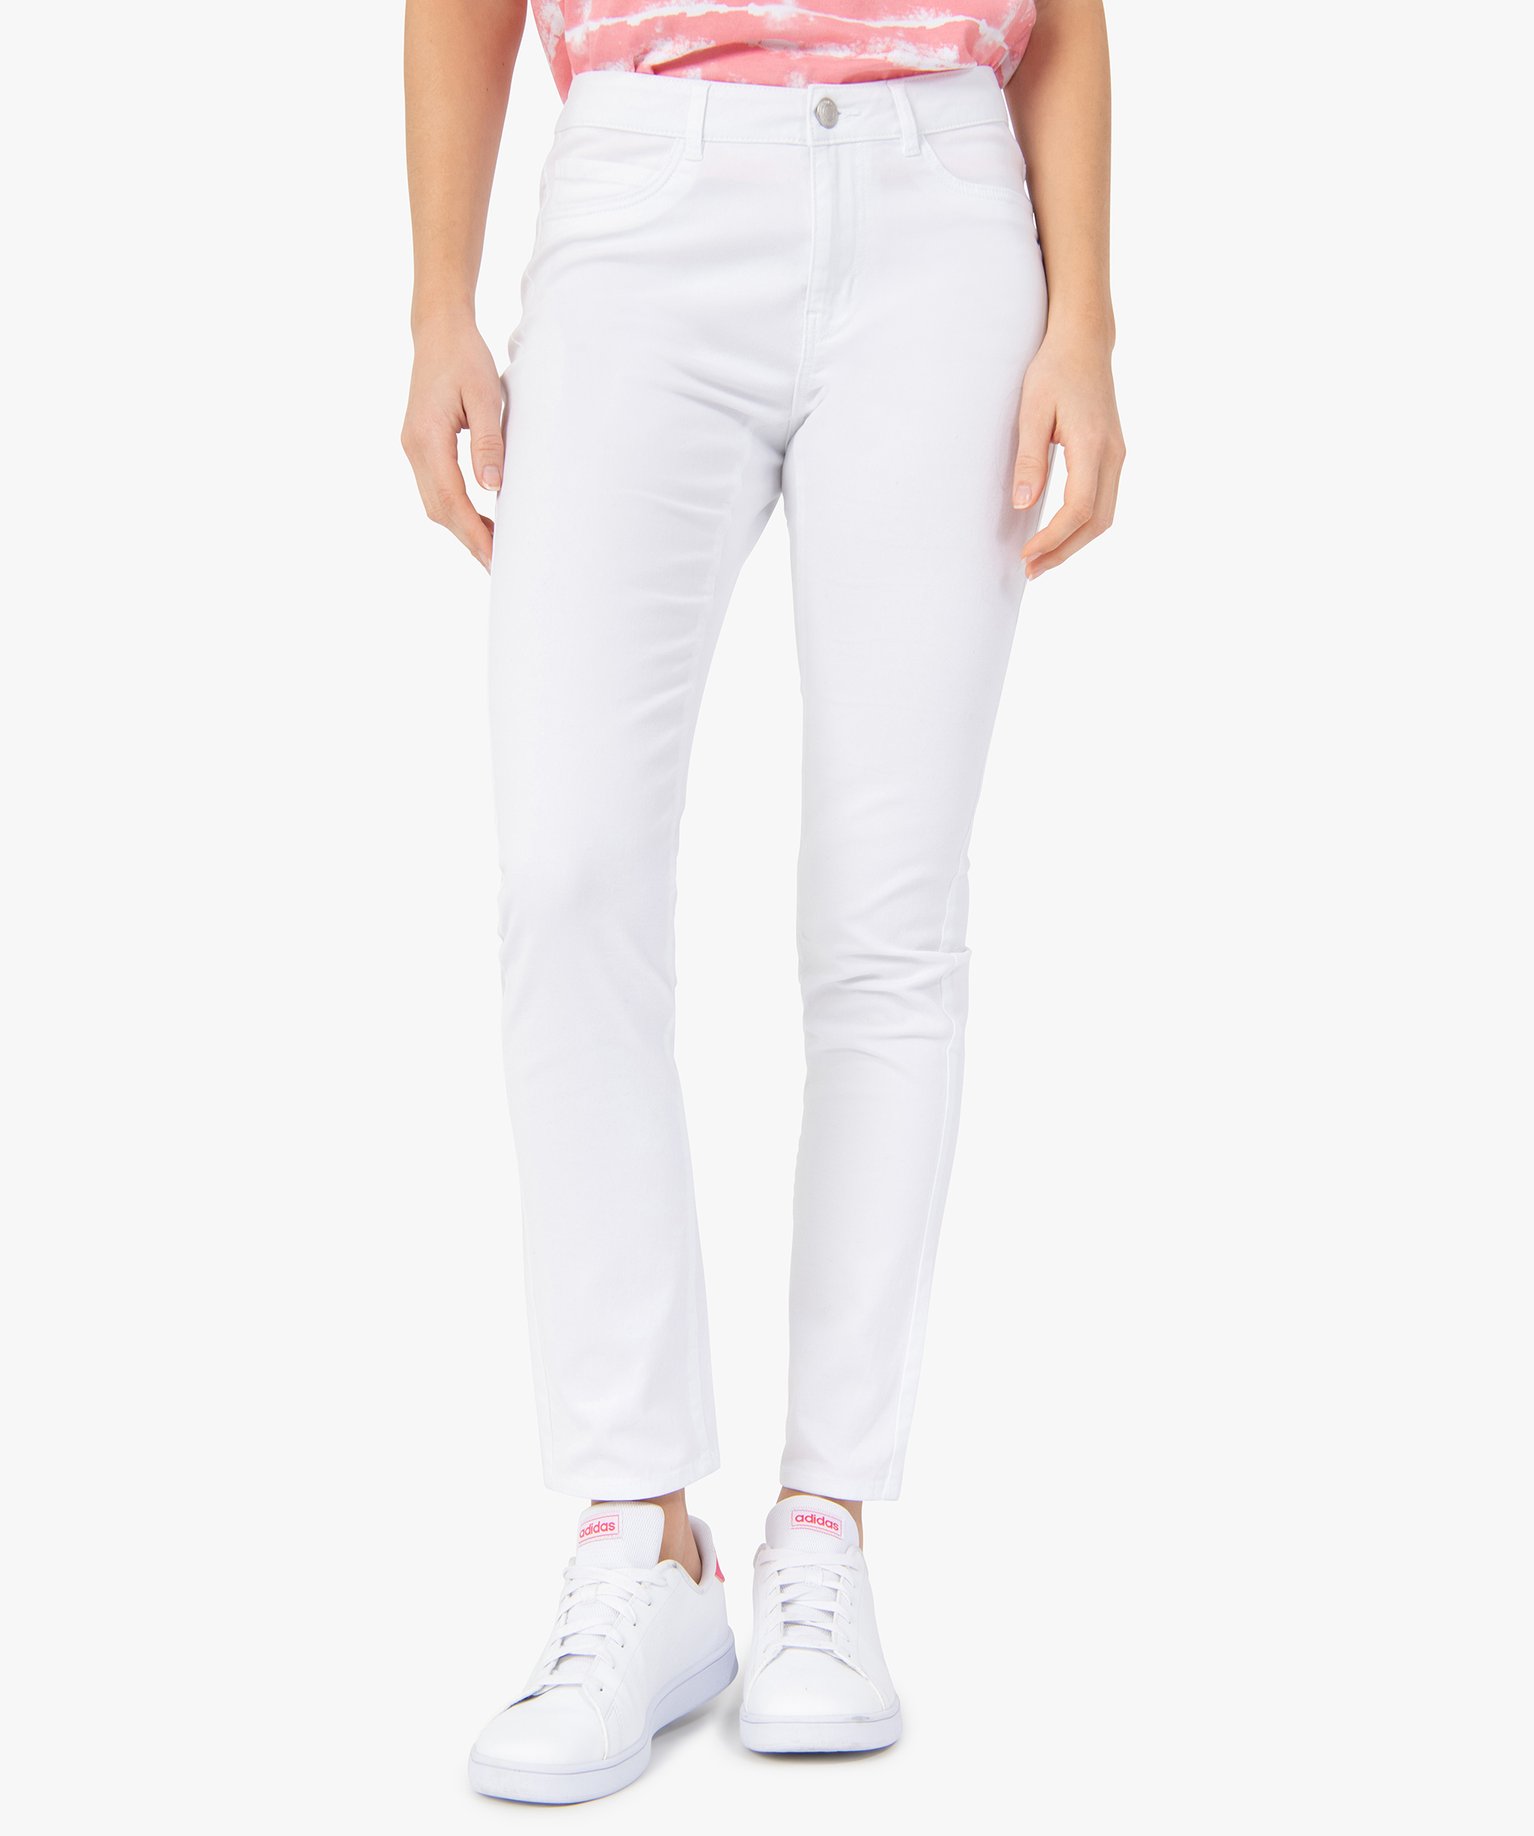 pantalon femme en toile denim coupe slim blanc pantalons